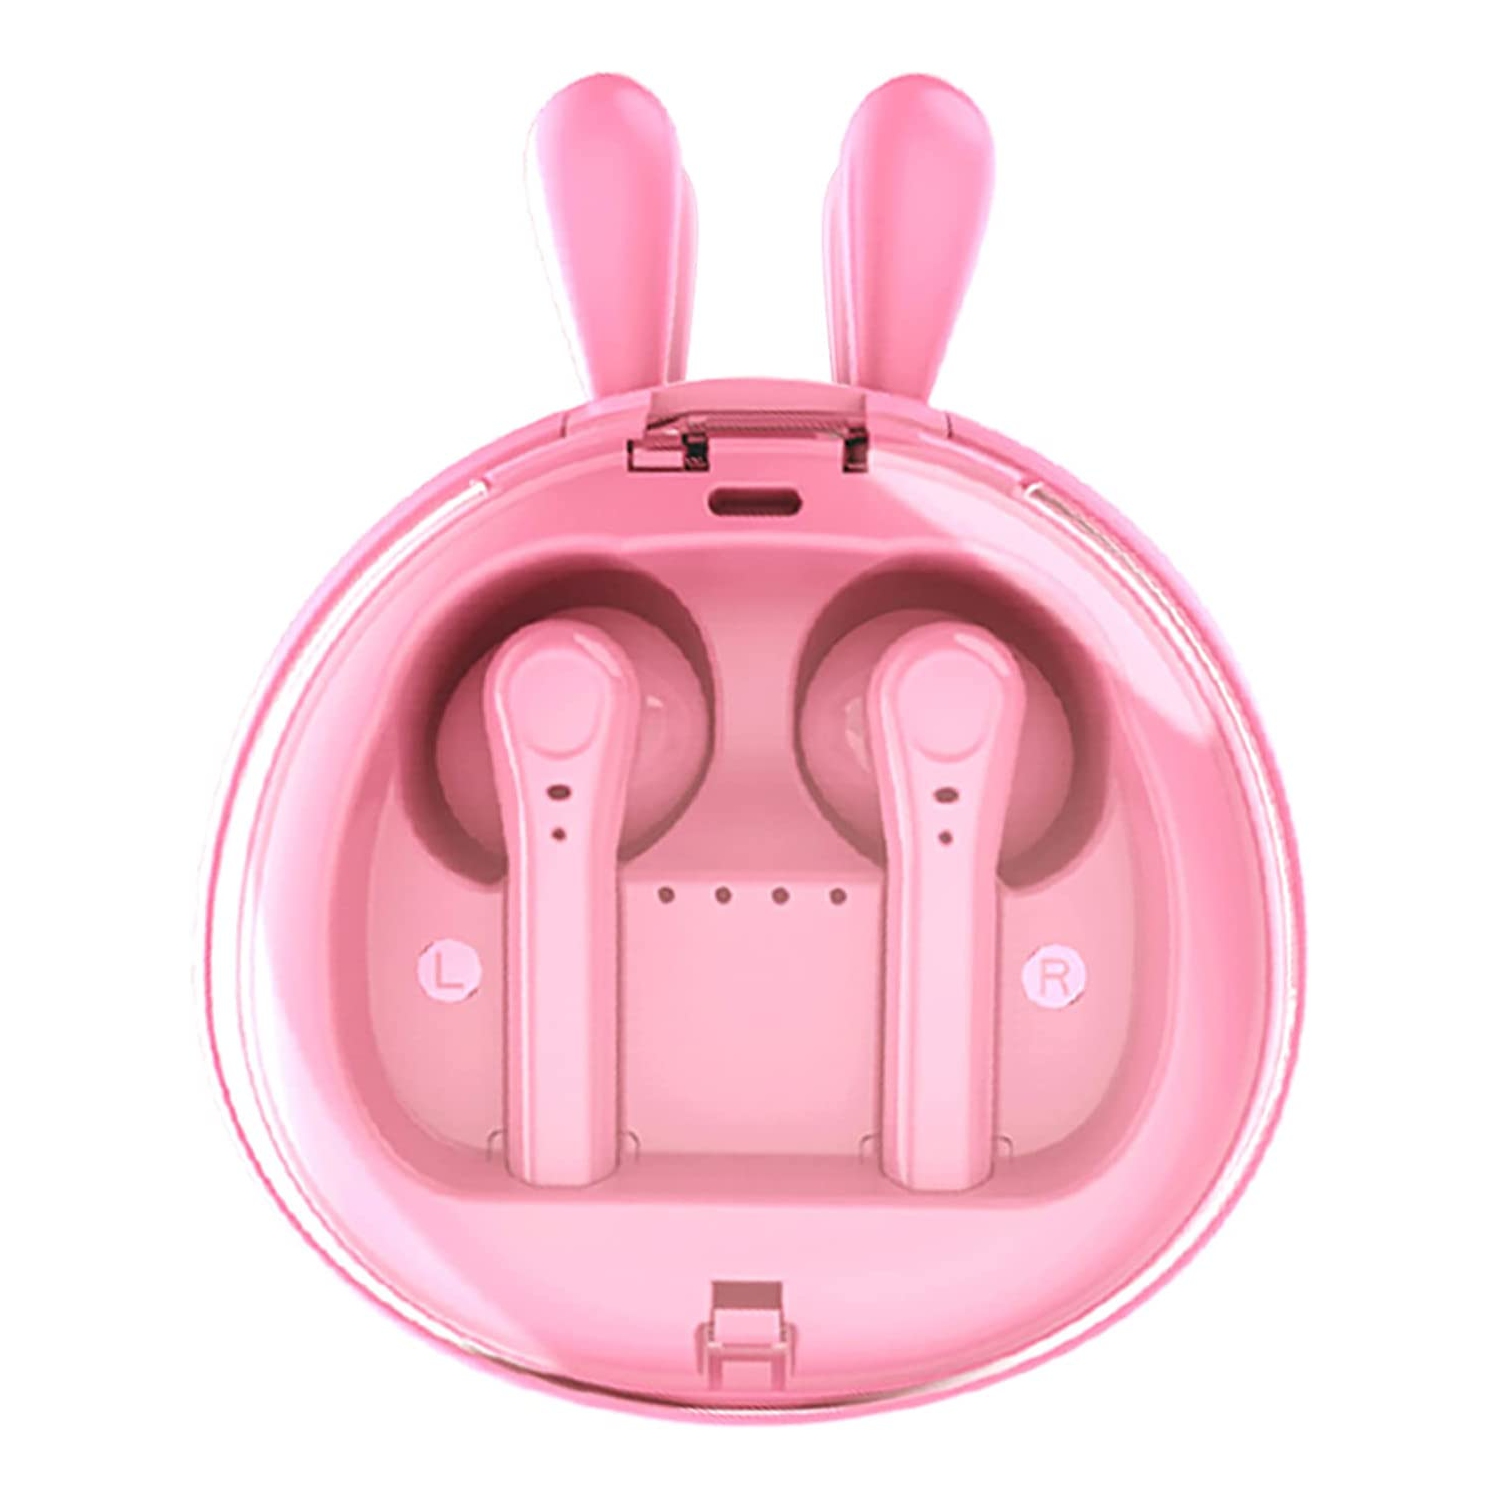 Dolaer Kids Wireless Earbuds with Charging Case, Cute Pink Rabbit Cartoon Earphones, BT 5.0 TWS HiFi Stereo Sound Noise Reduction Waterproof Sport Headphones for Boys/Girls, Built-